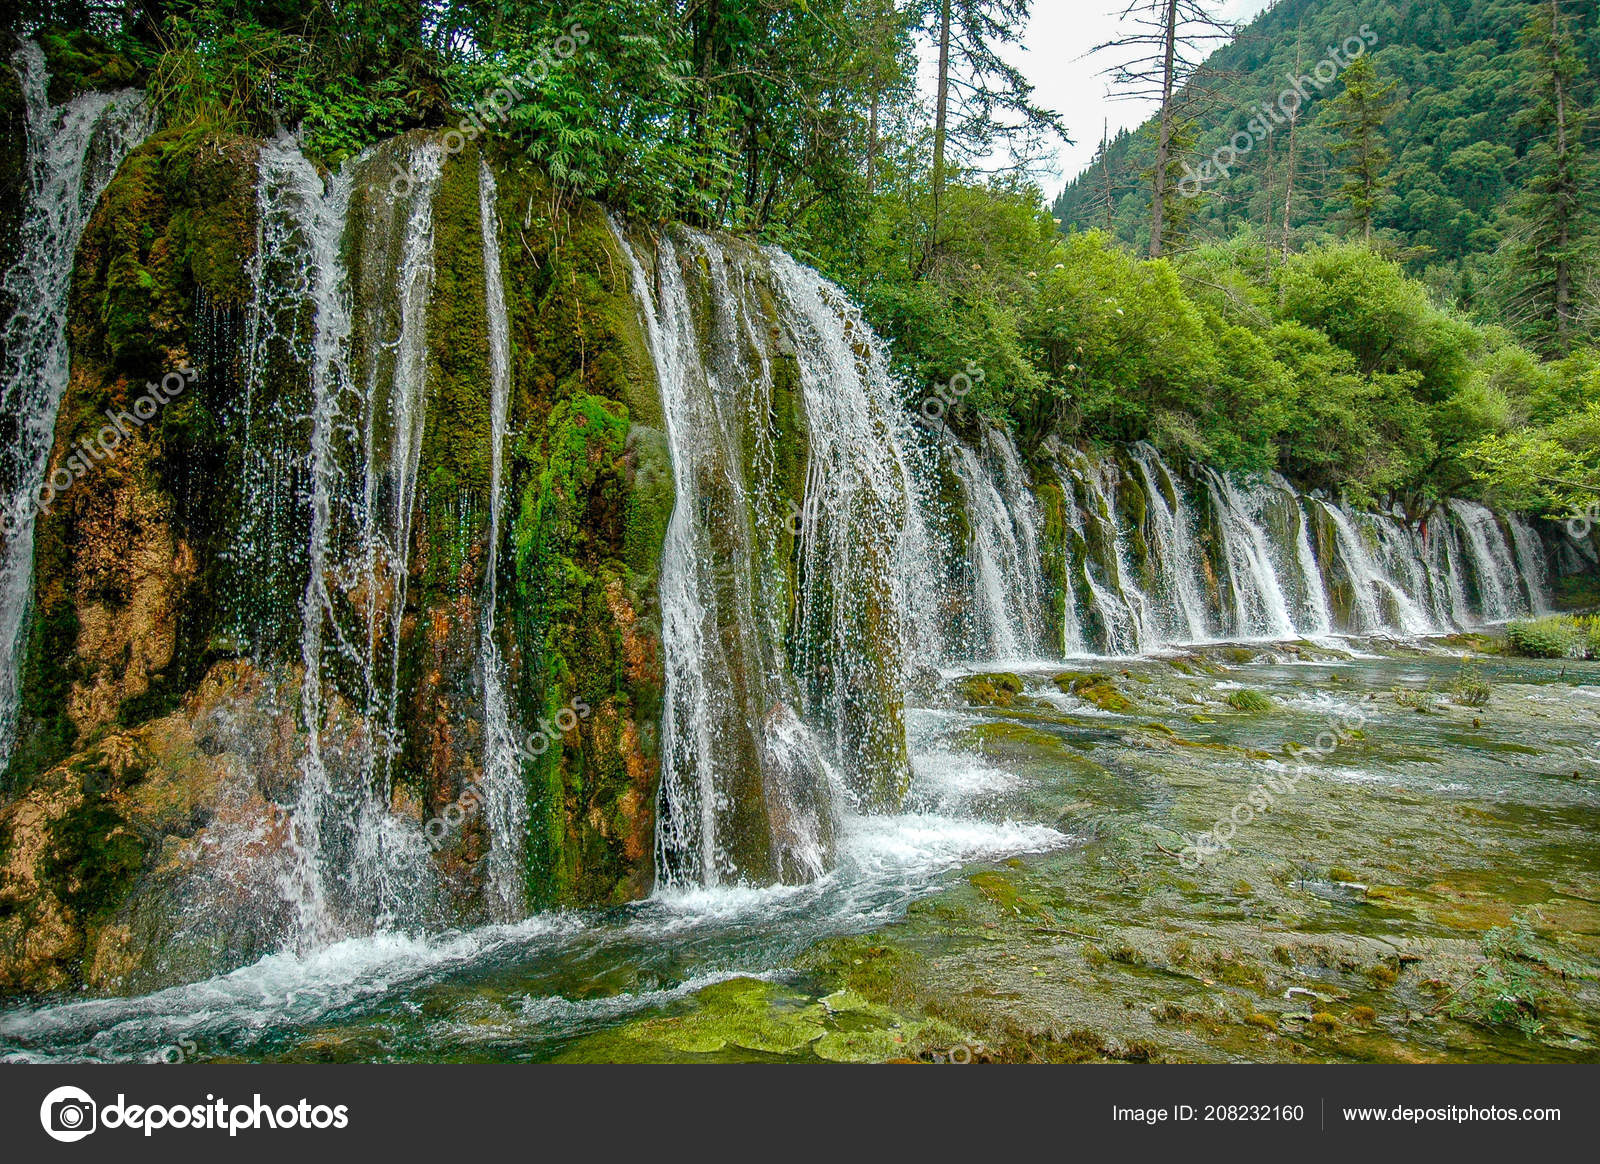 depositphotos_208232160-stock-photo-panda-falls-lush-vegetation-jiuzhaigou.jpg